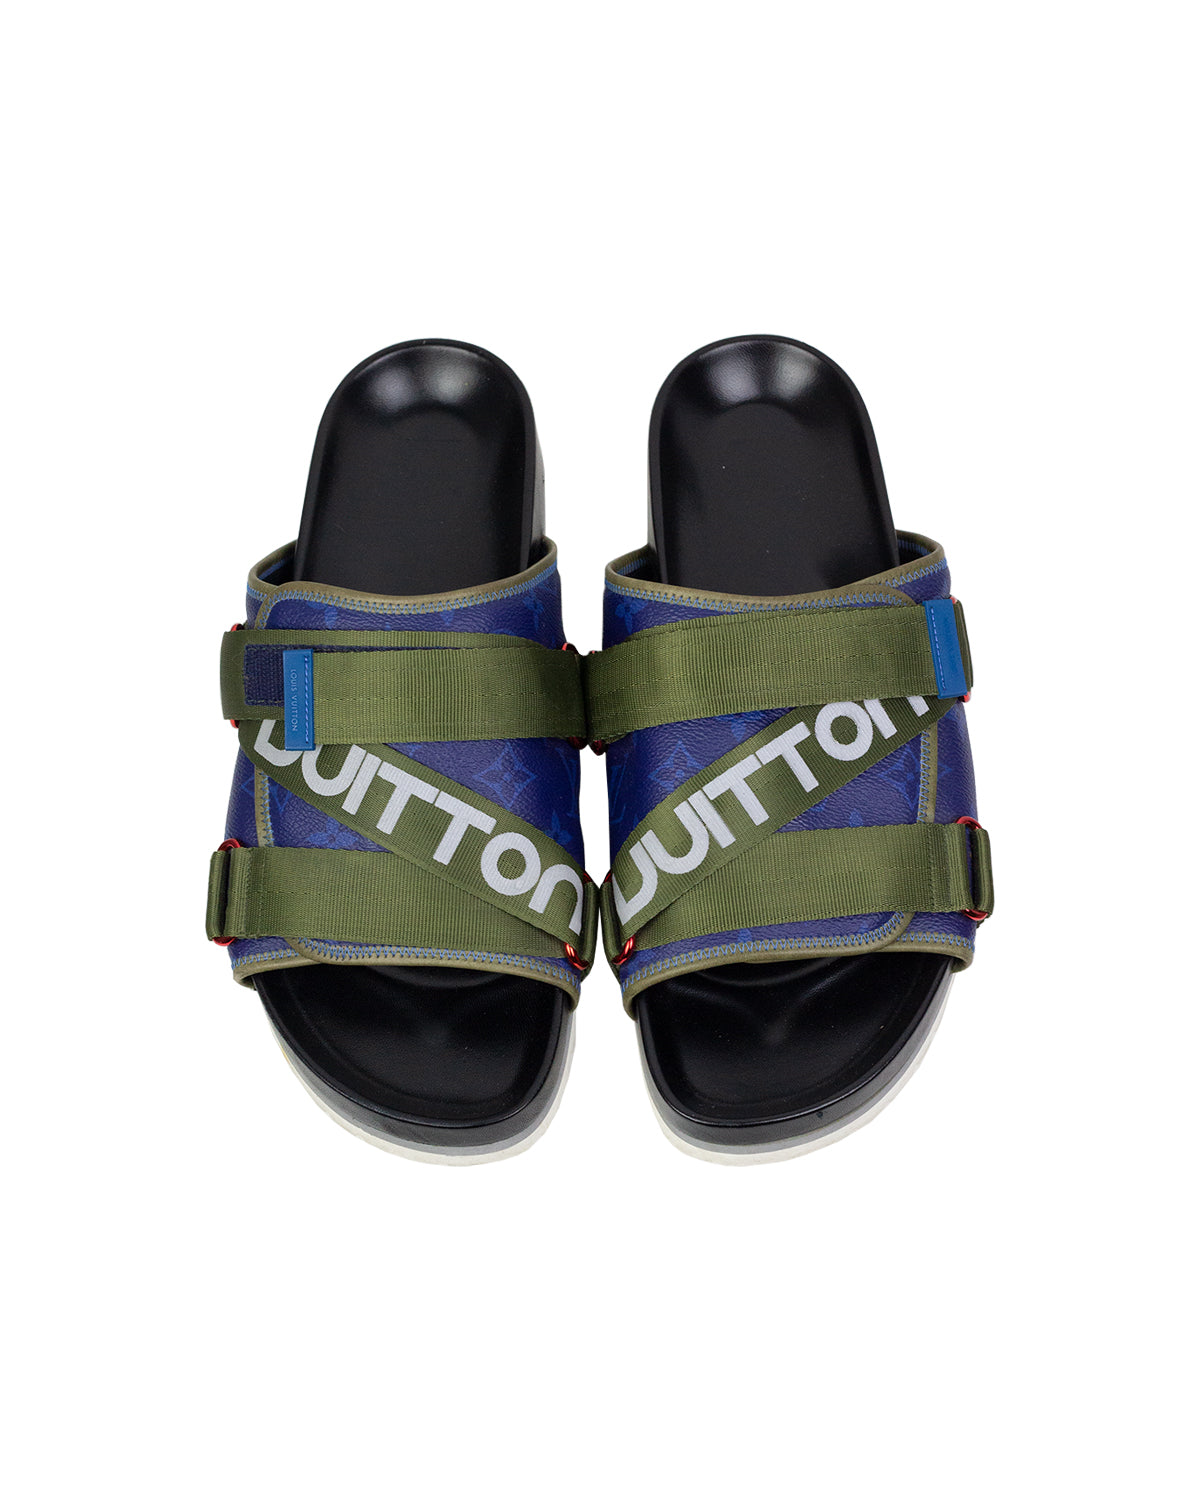 Louis Vuitton sandals brand new